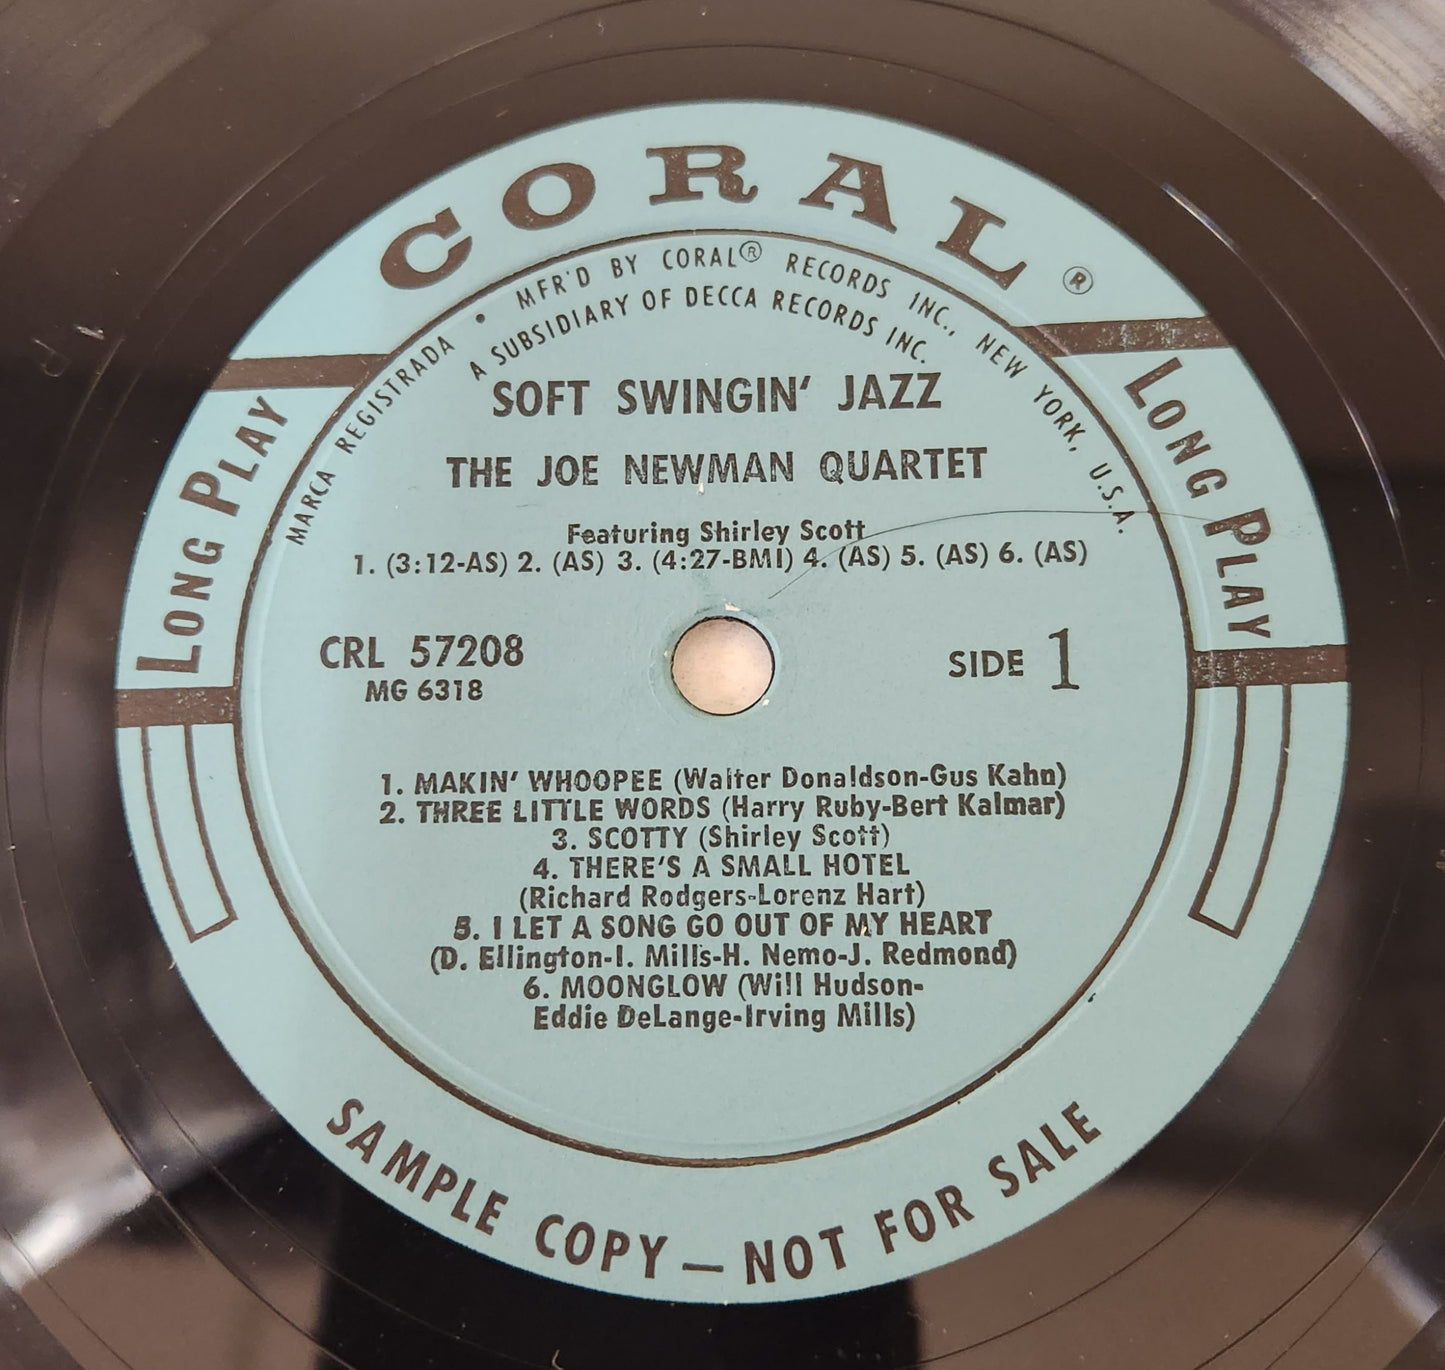 The Joe Newman Quartet Featuring Shirley Scott "Soft Swingin' Jazz" SAMPLE Album